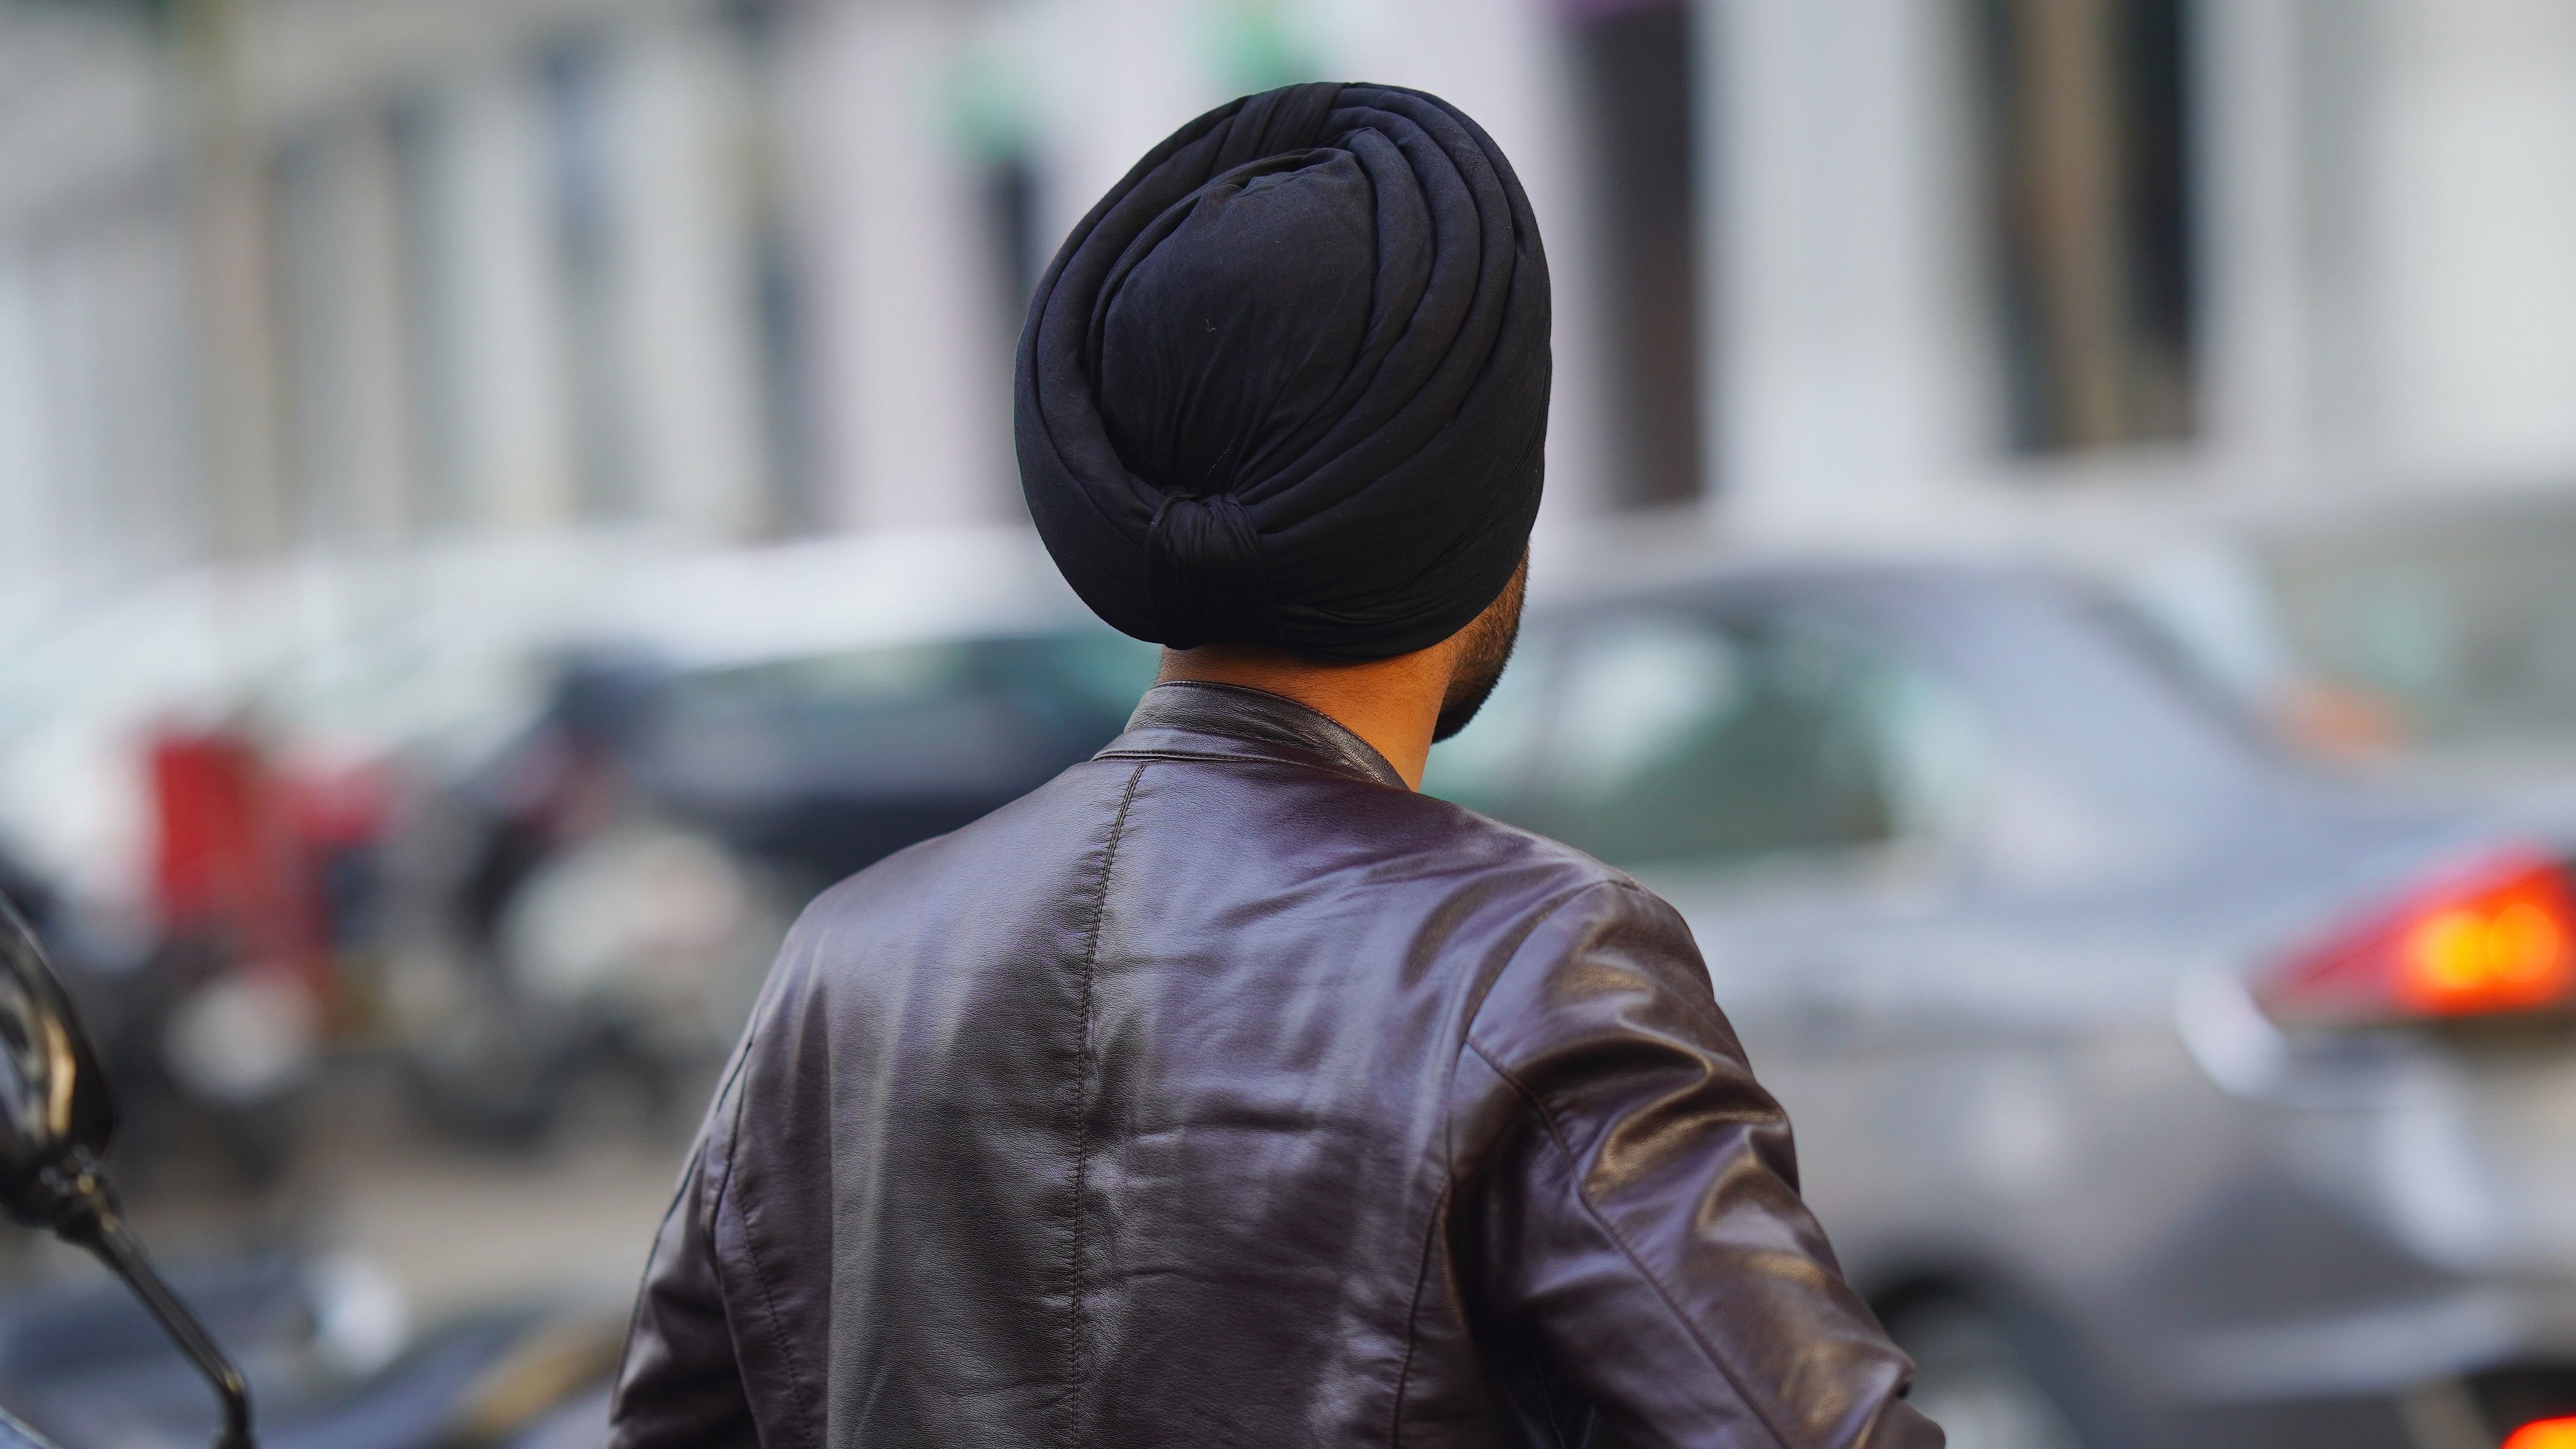 <div class="paragraphs"><p>Representative image of Sikh man with turban.</p></div>